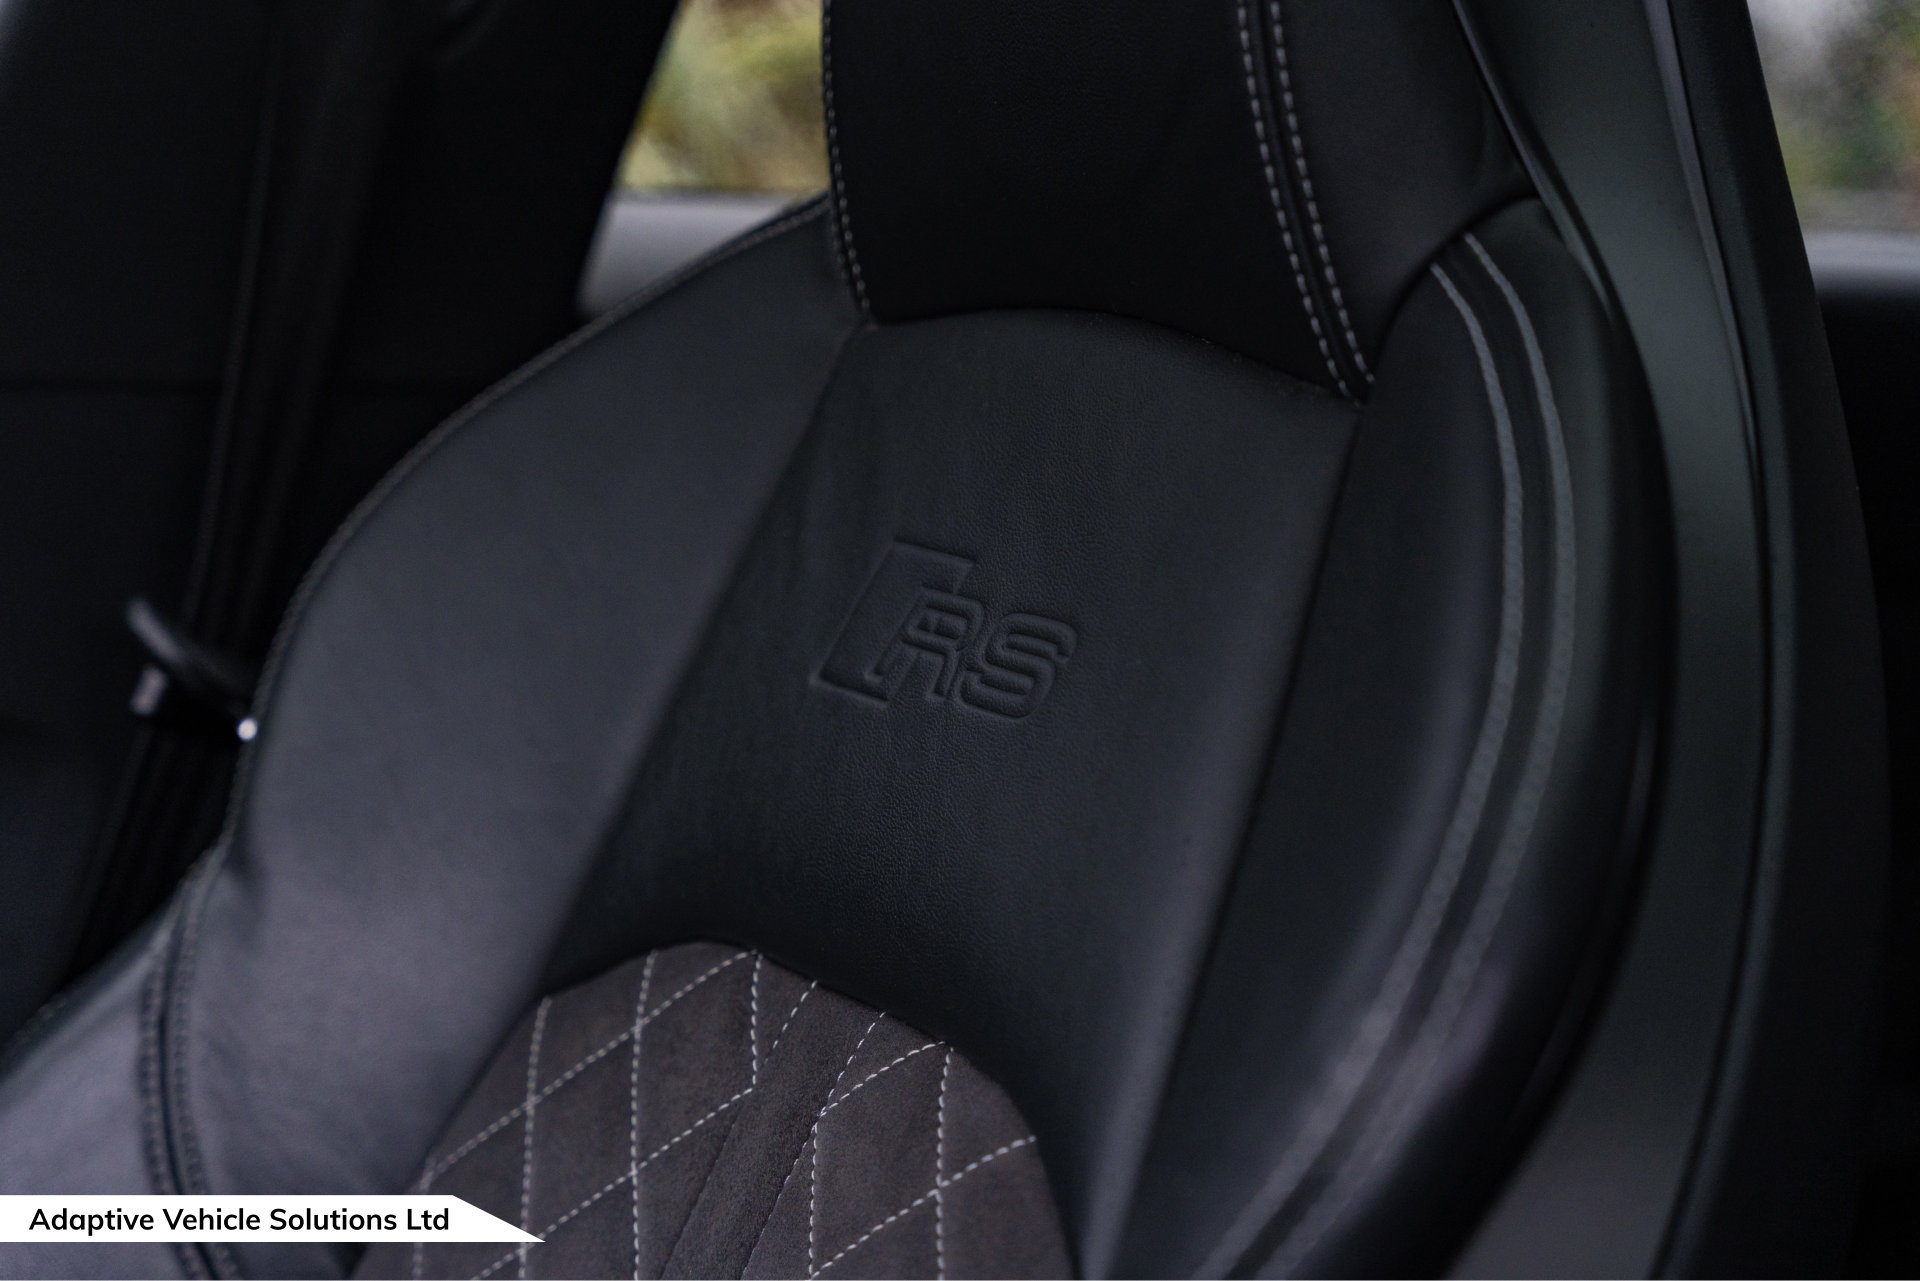 2019 Audi RS4 Avant Sport Edition Nardo Grey embossed seats